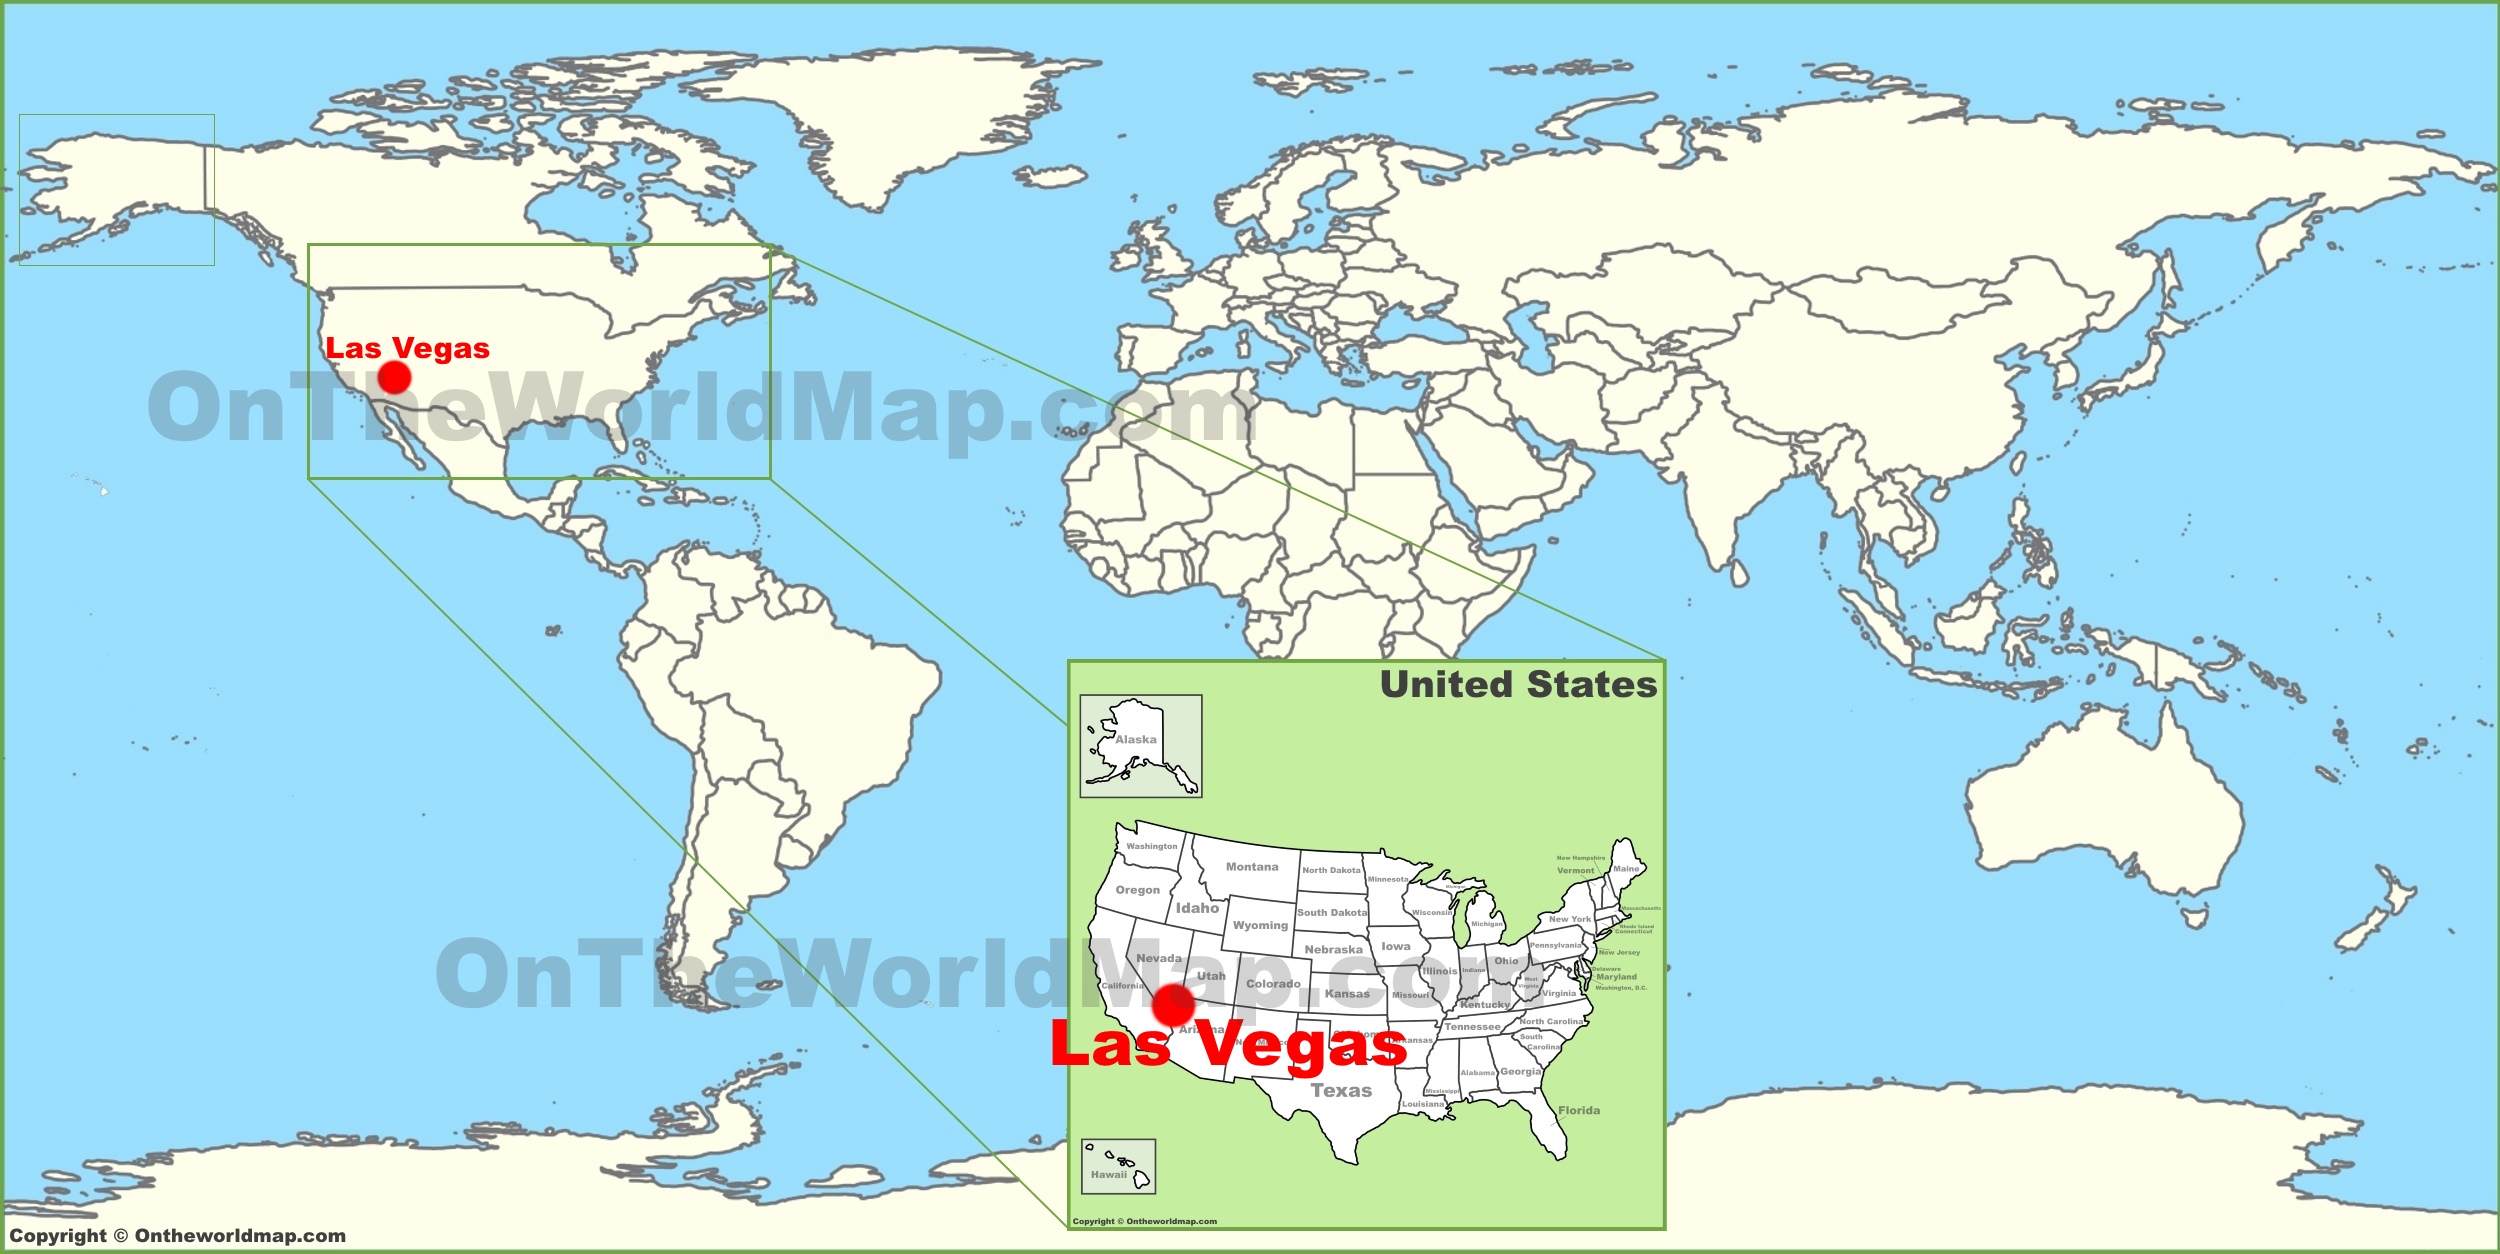 Las Vegas On The World Map